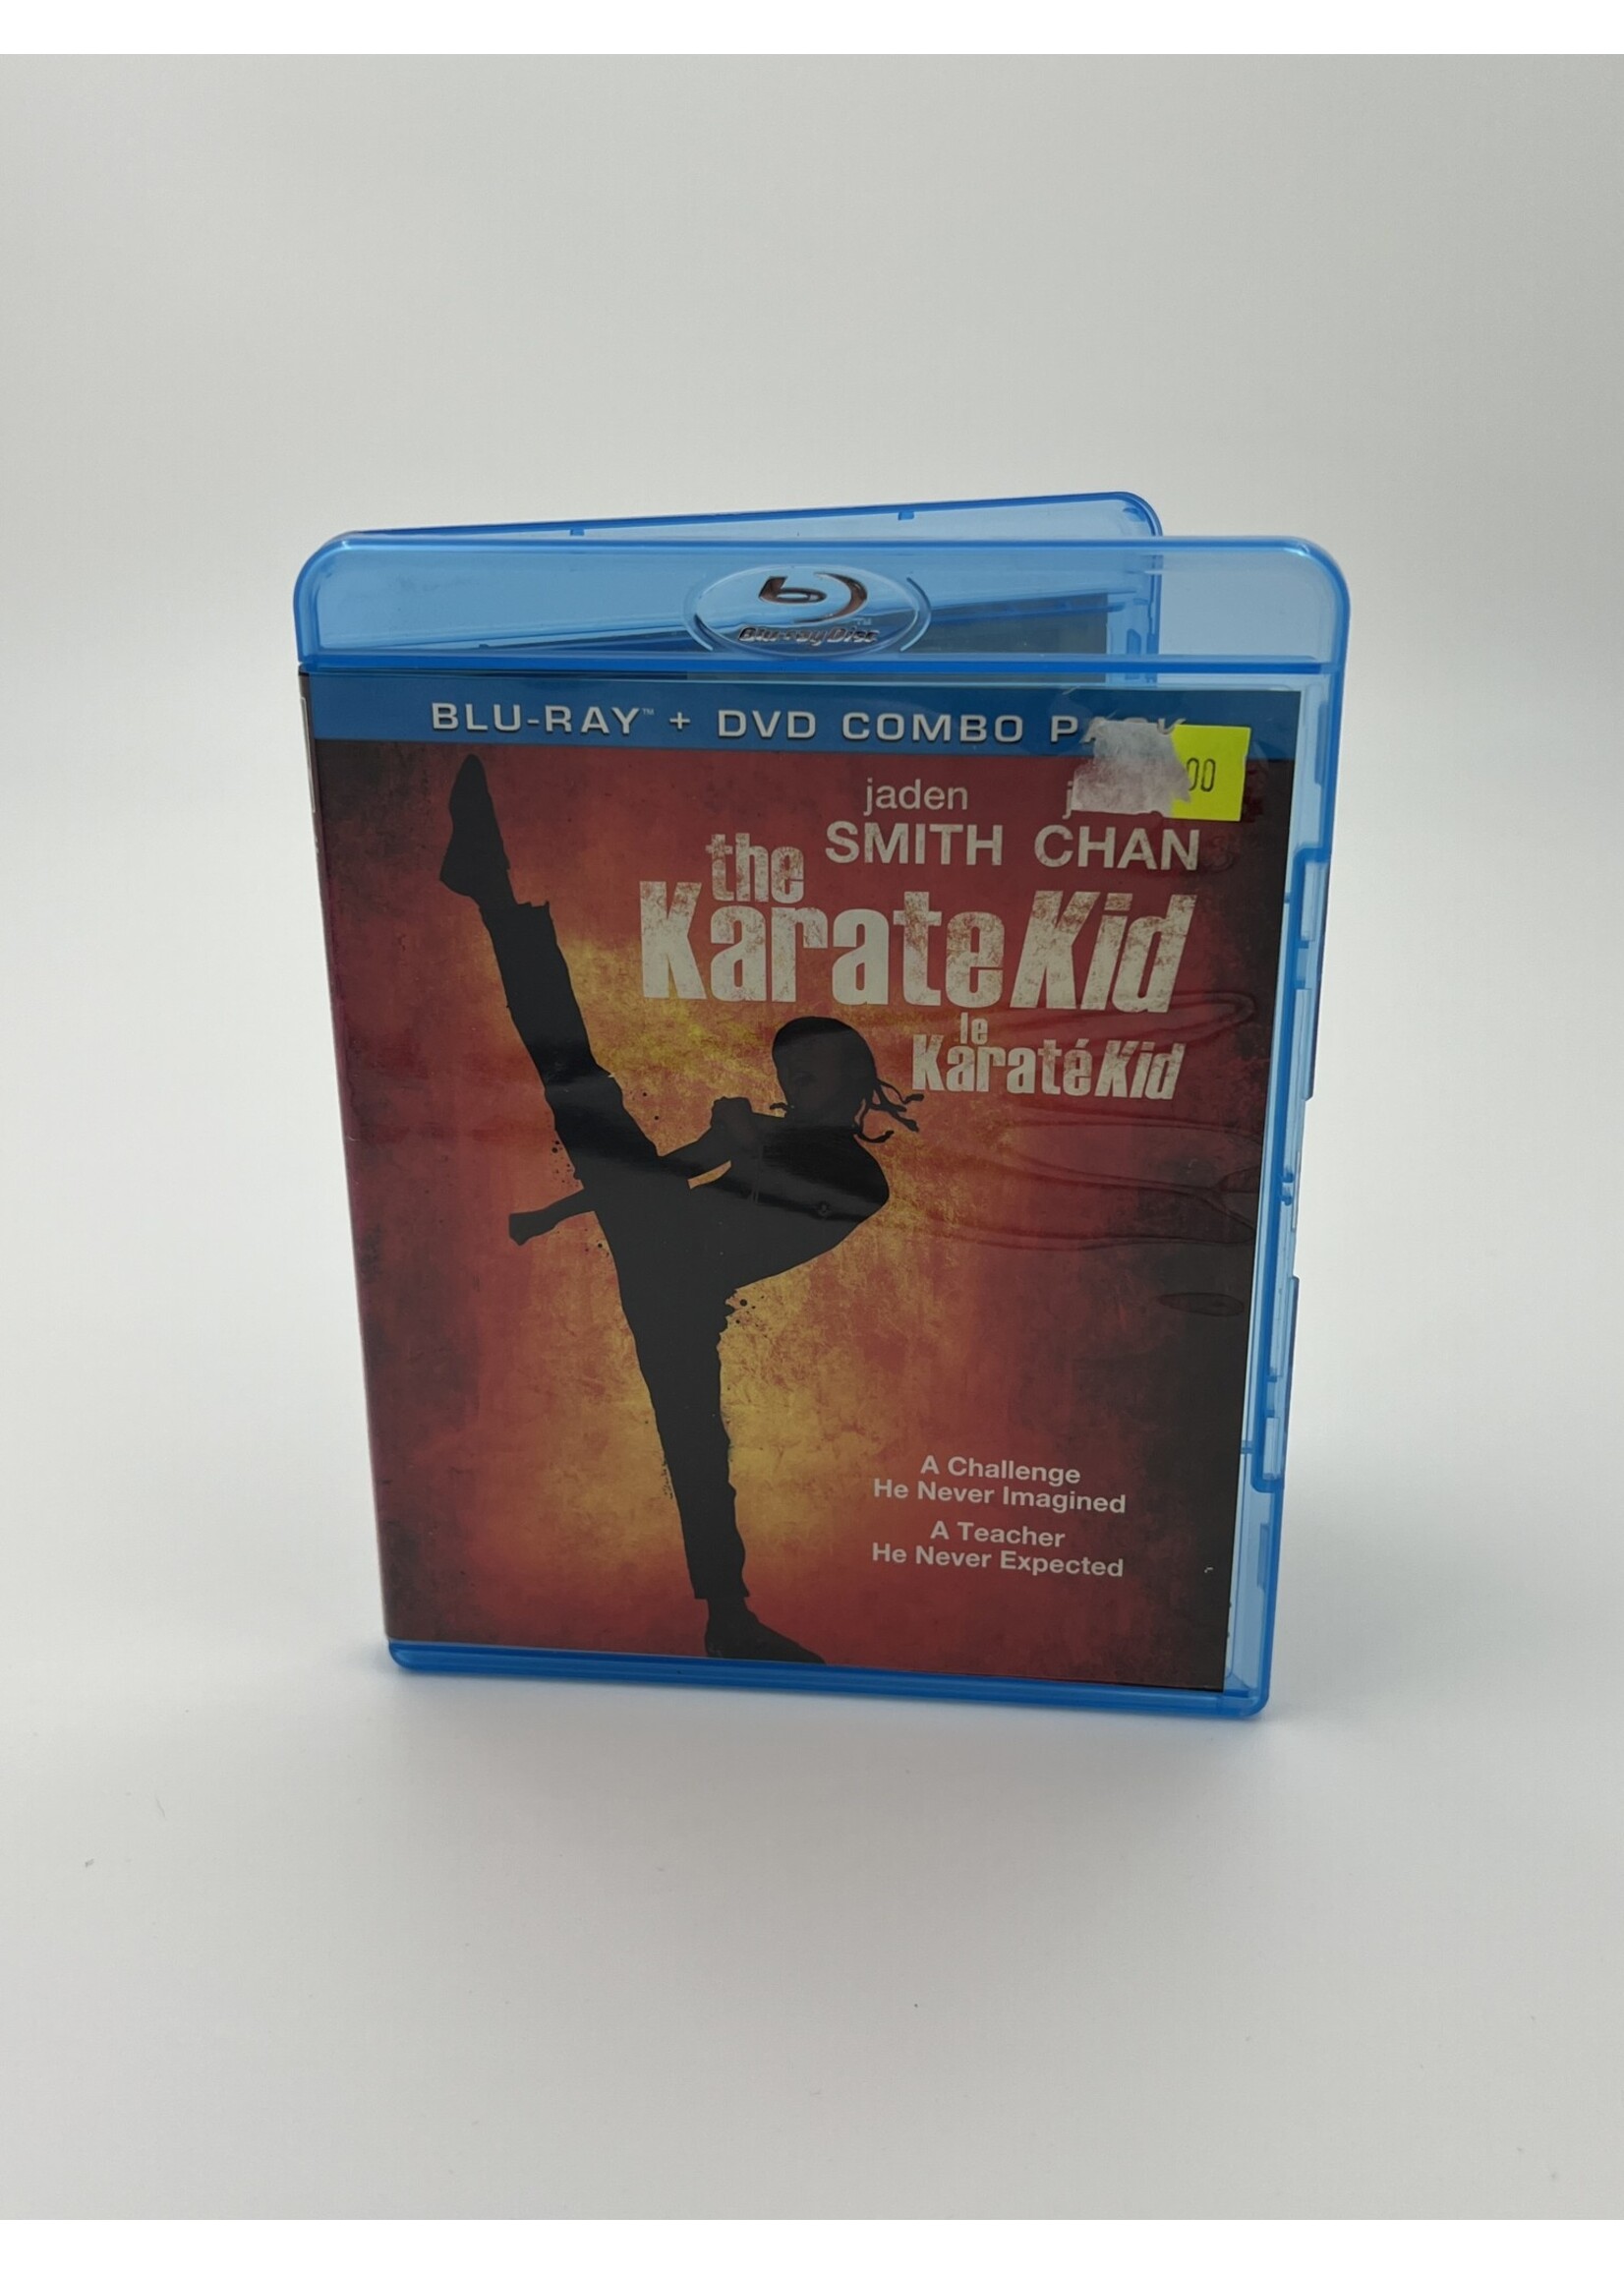 Bluray The Karate Kid Bluray